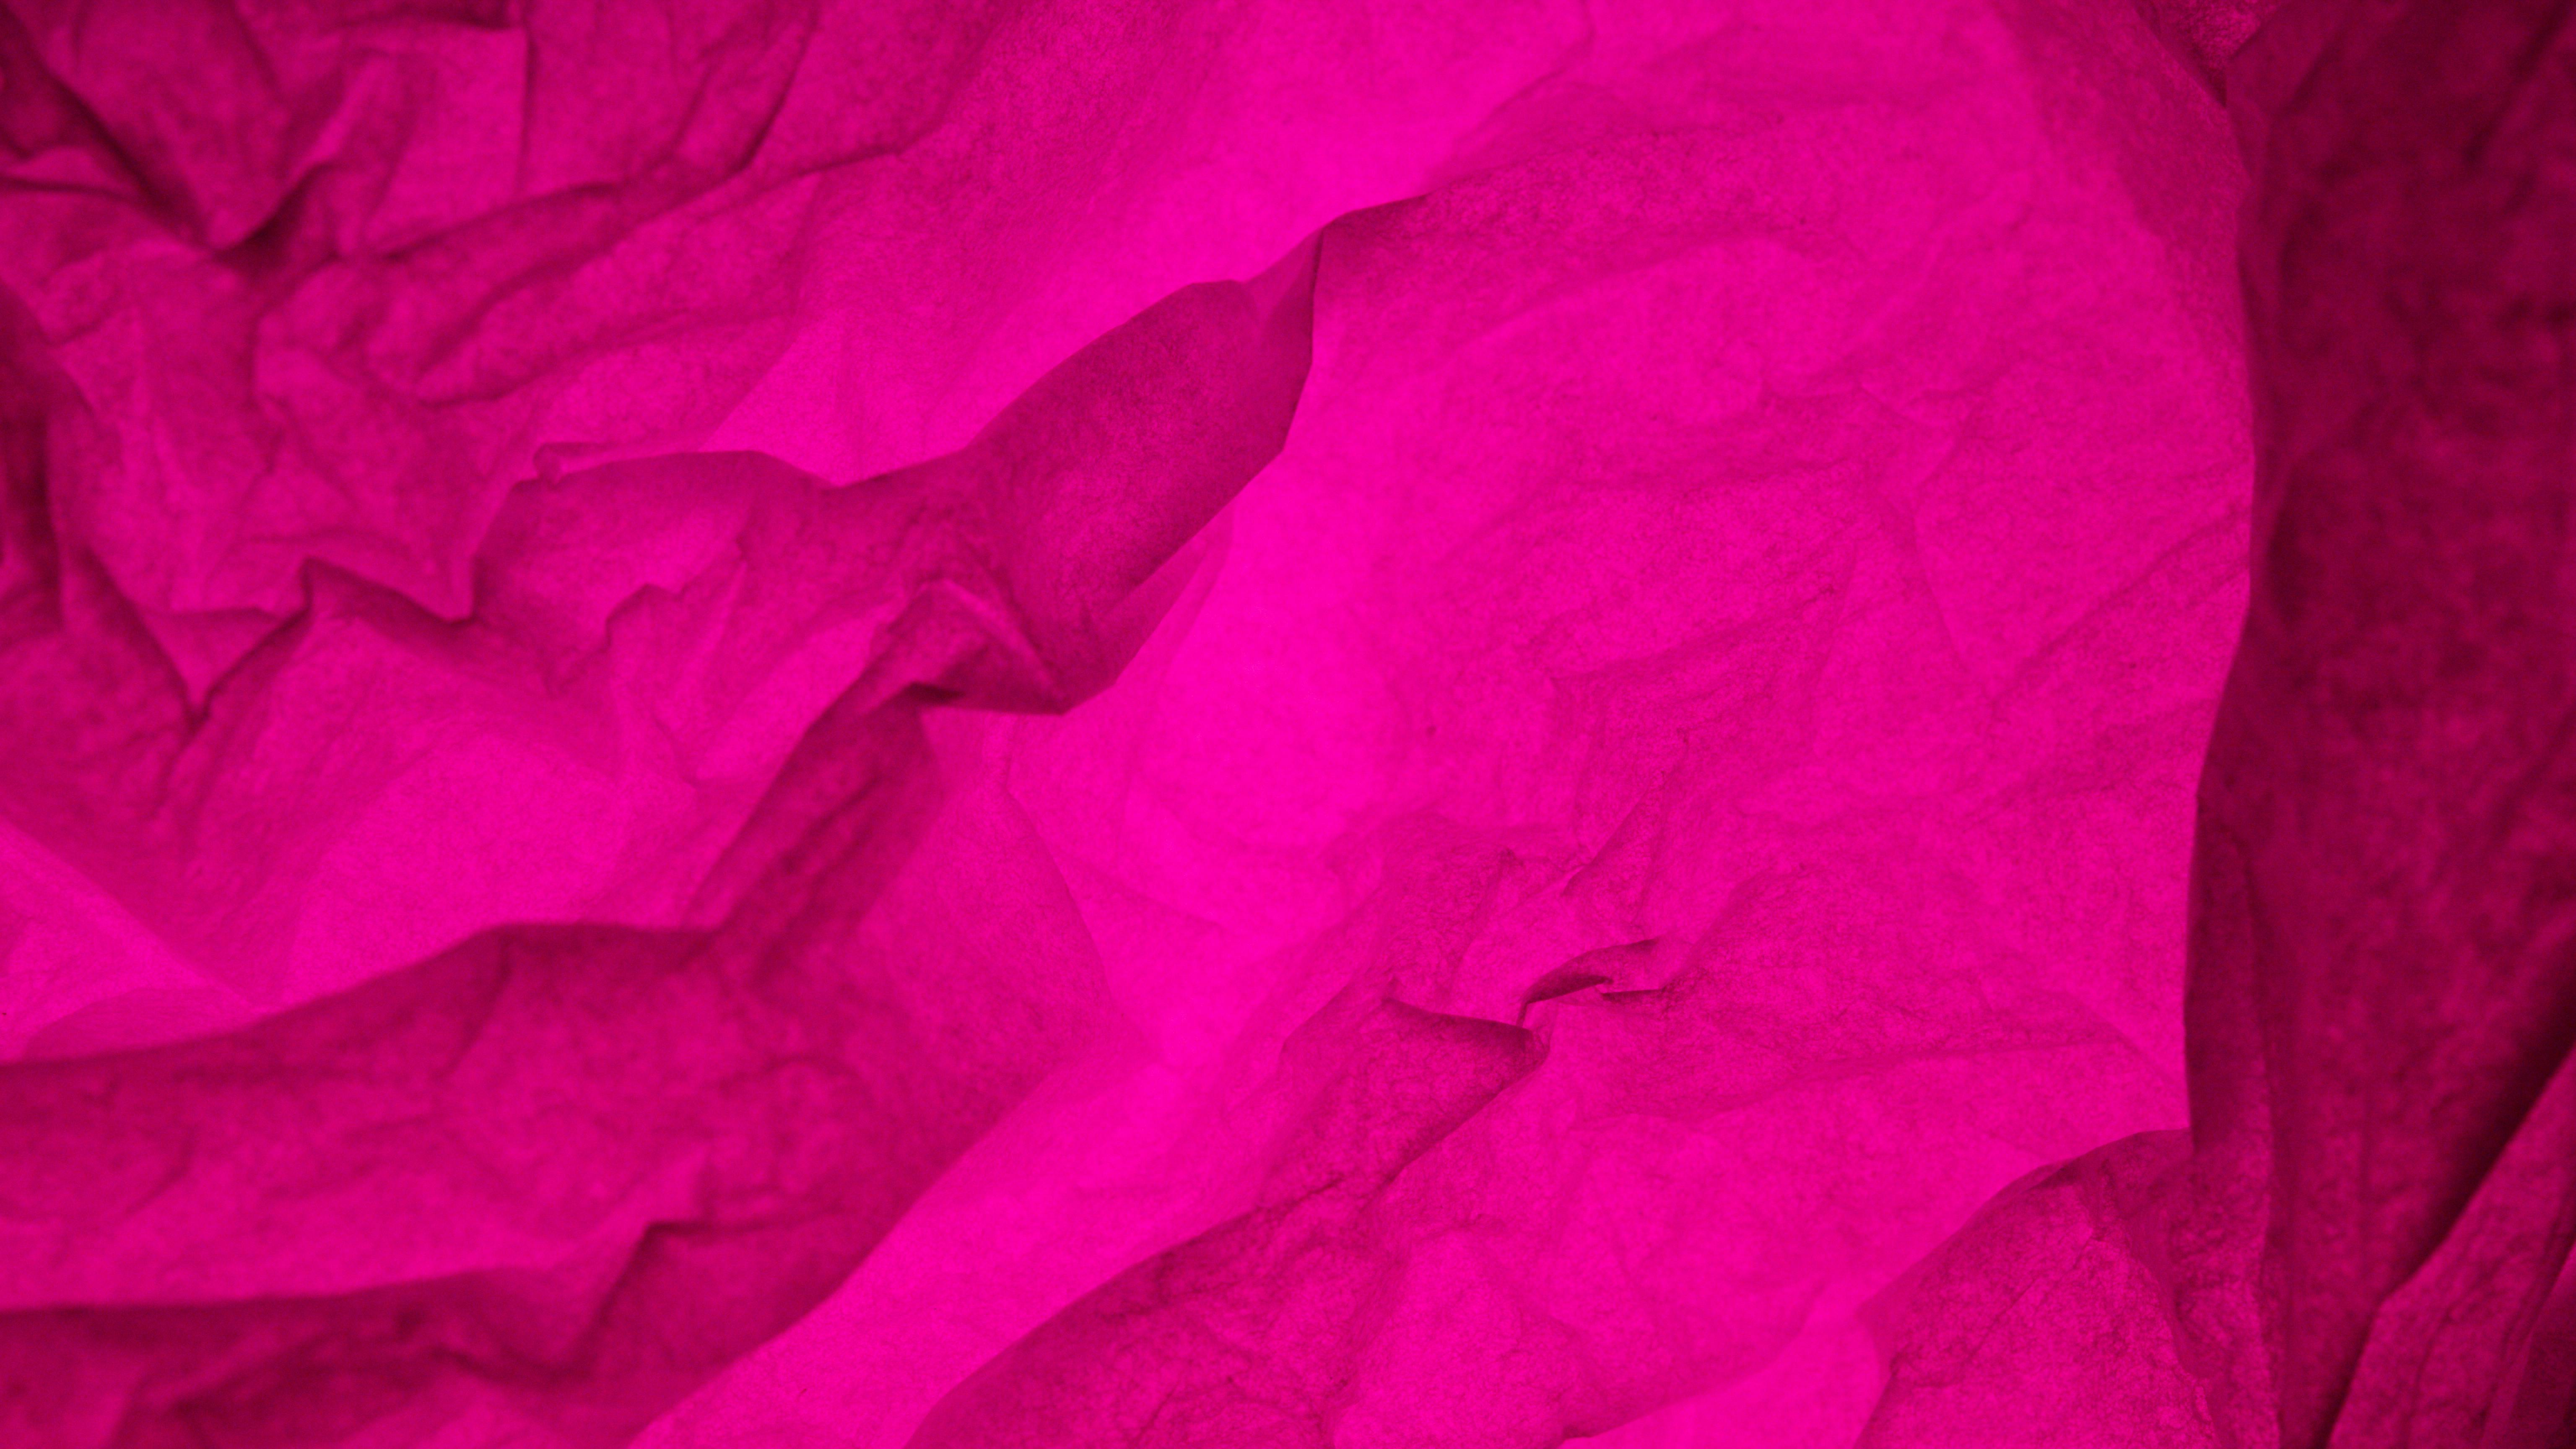 Pink Parchment Paper Texture Picture, Free Photograph